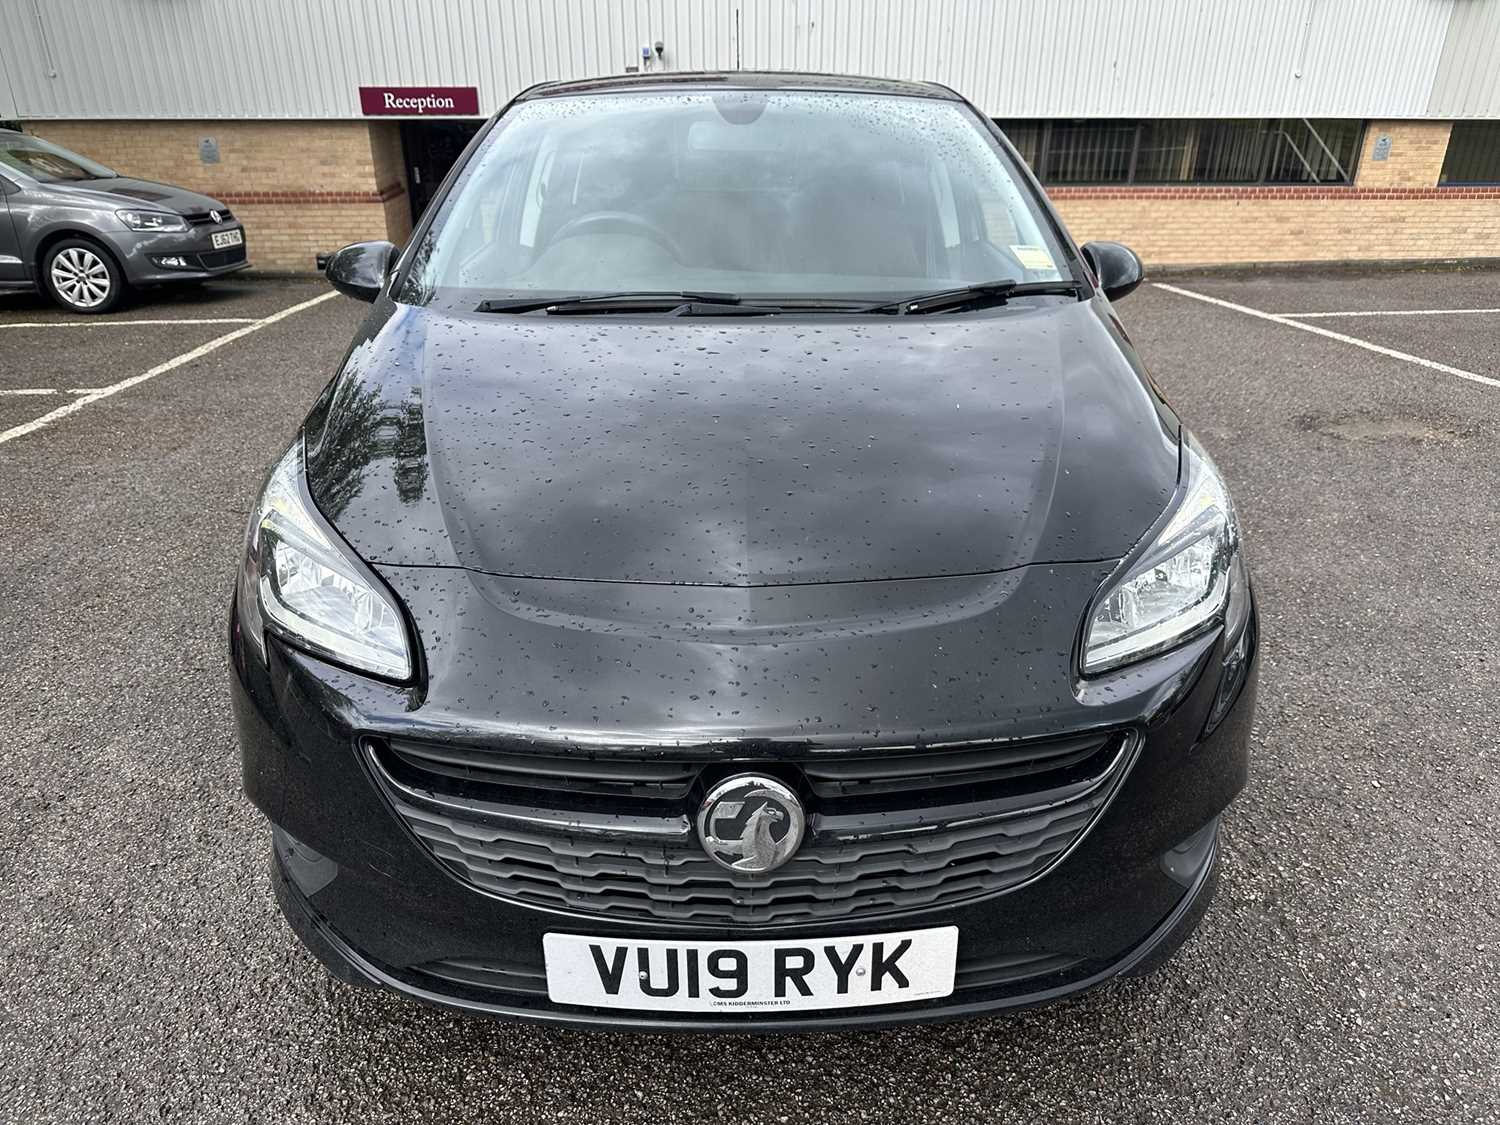 2019 Vauxhall Corsa SRI VX - Line Nav Black, 5 door hatchback, manual, reg. no. VU19 RYK - Image 2 of 15